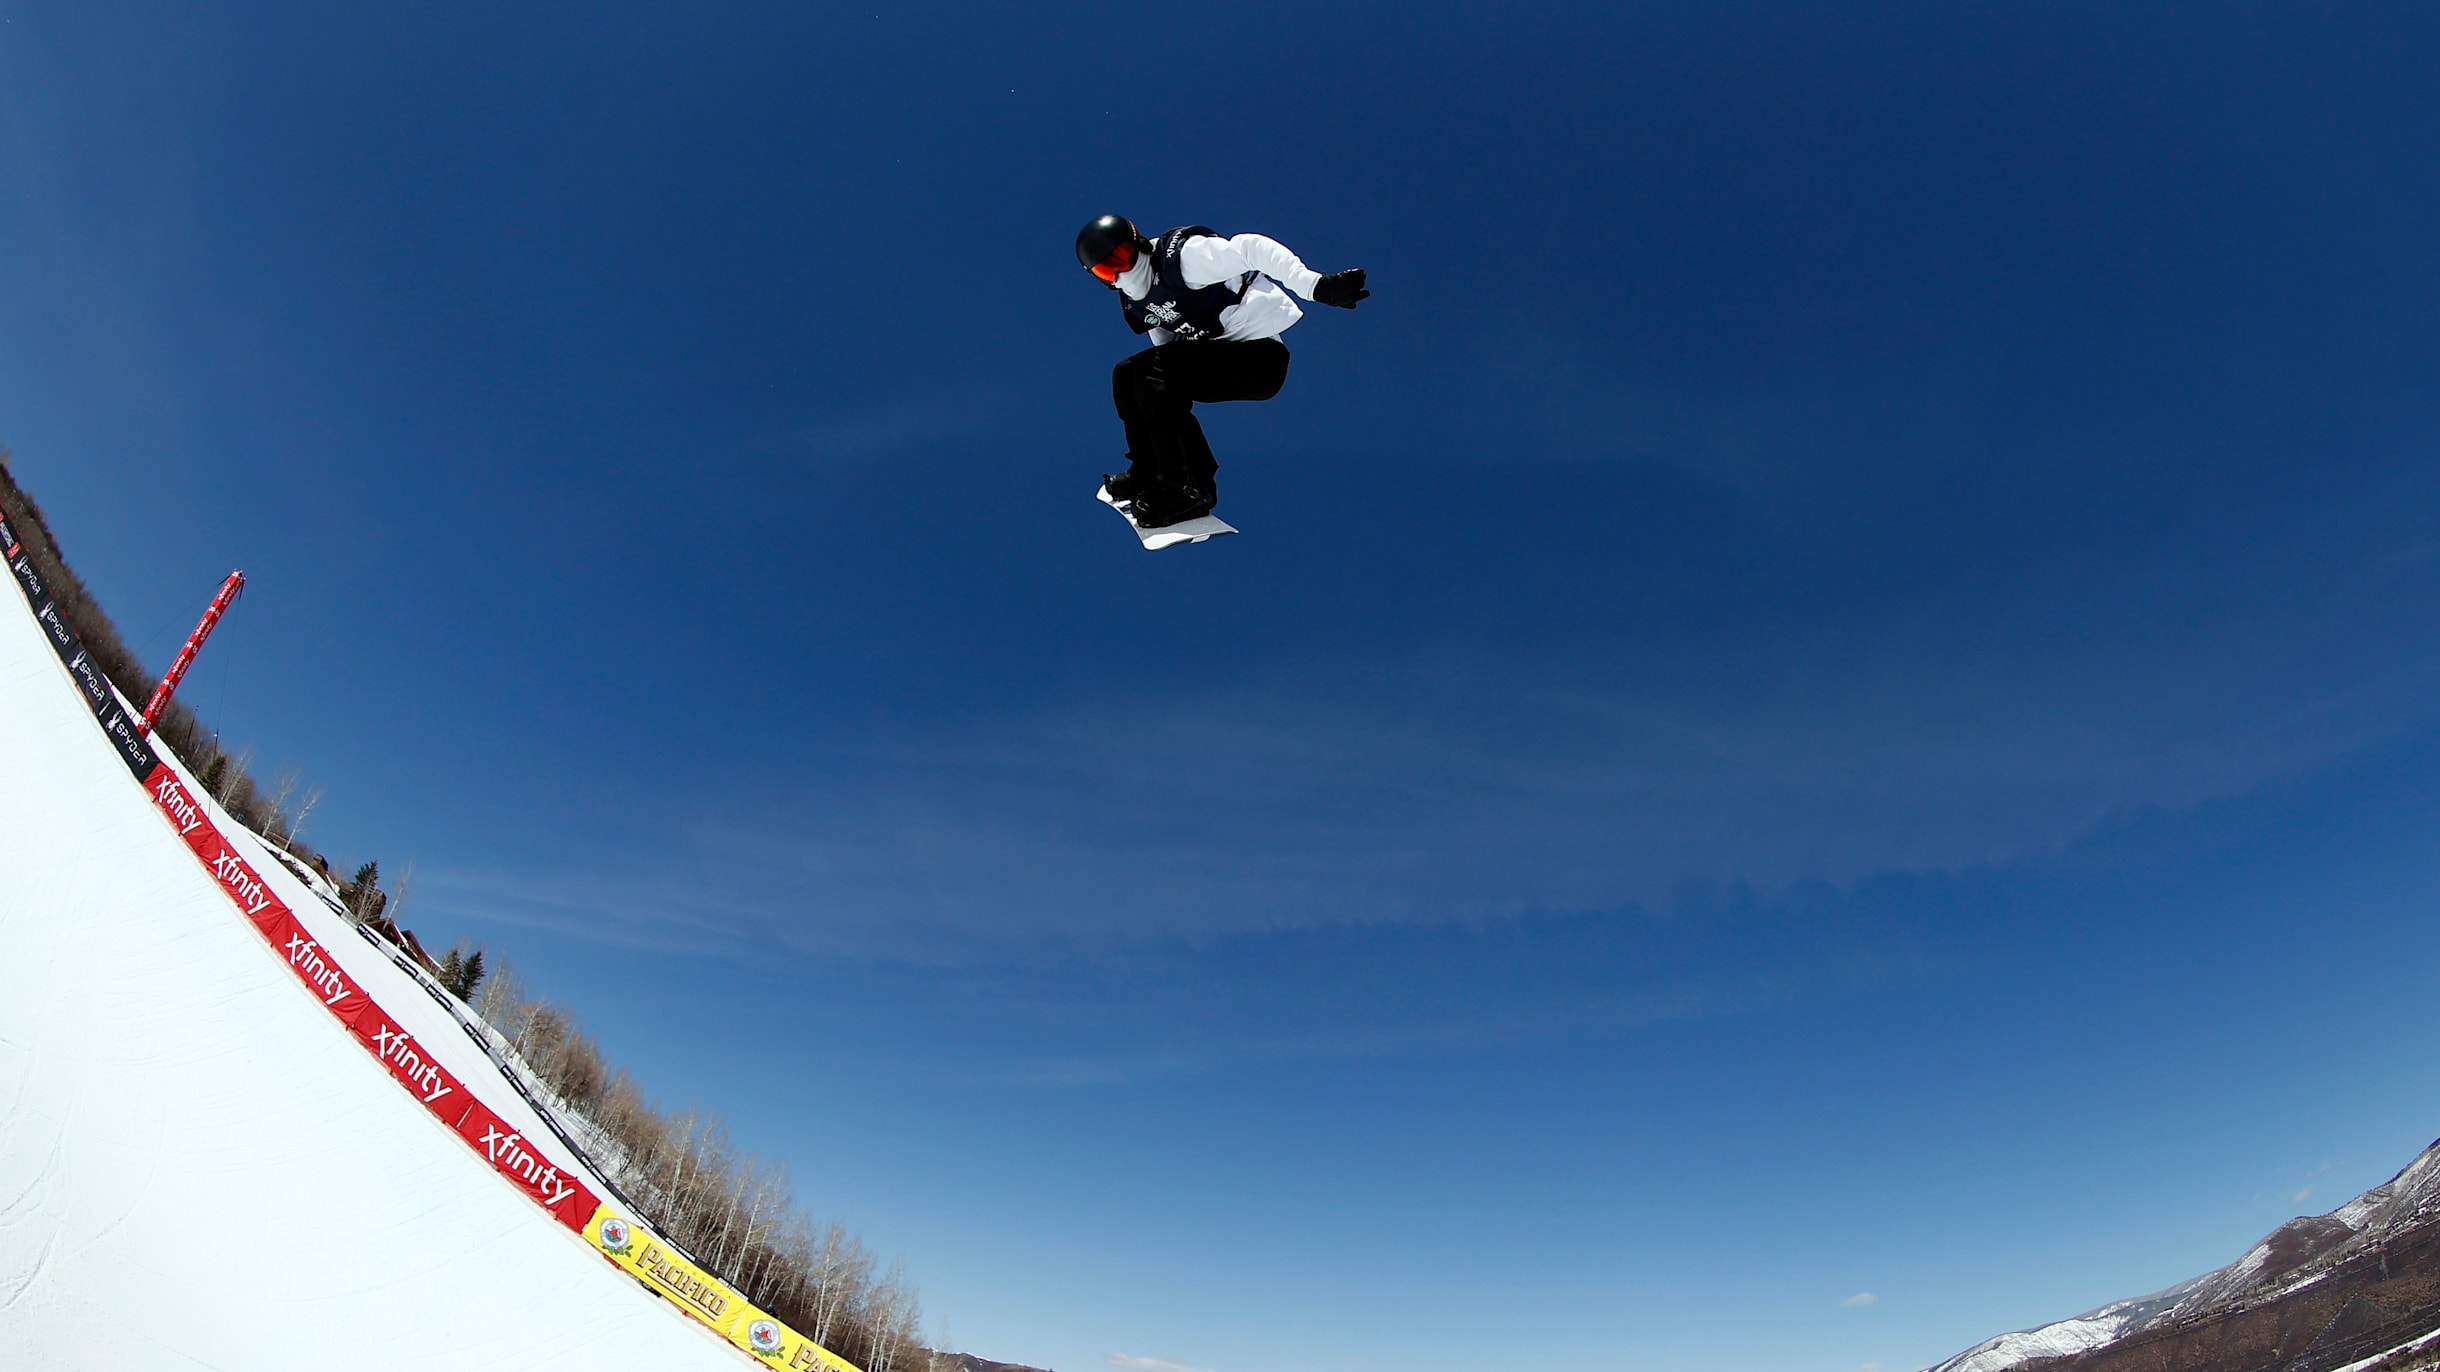 Shaun White - Olympian, Snowboarder, Skateboarder, Actor